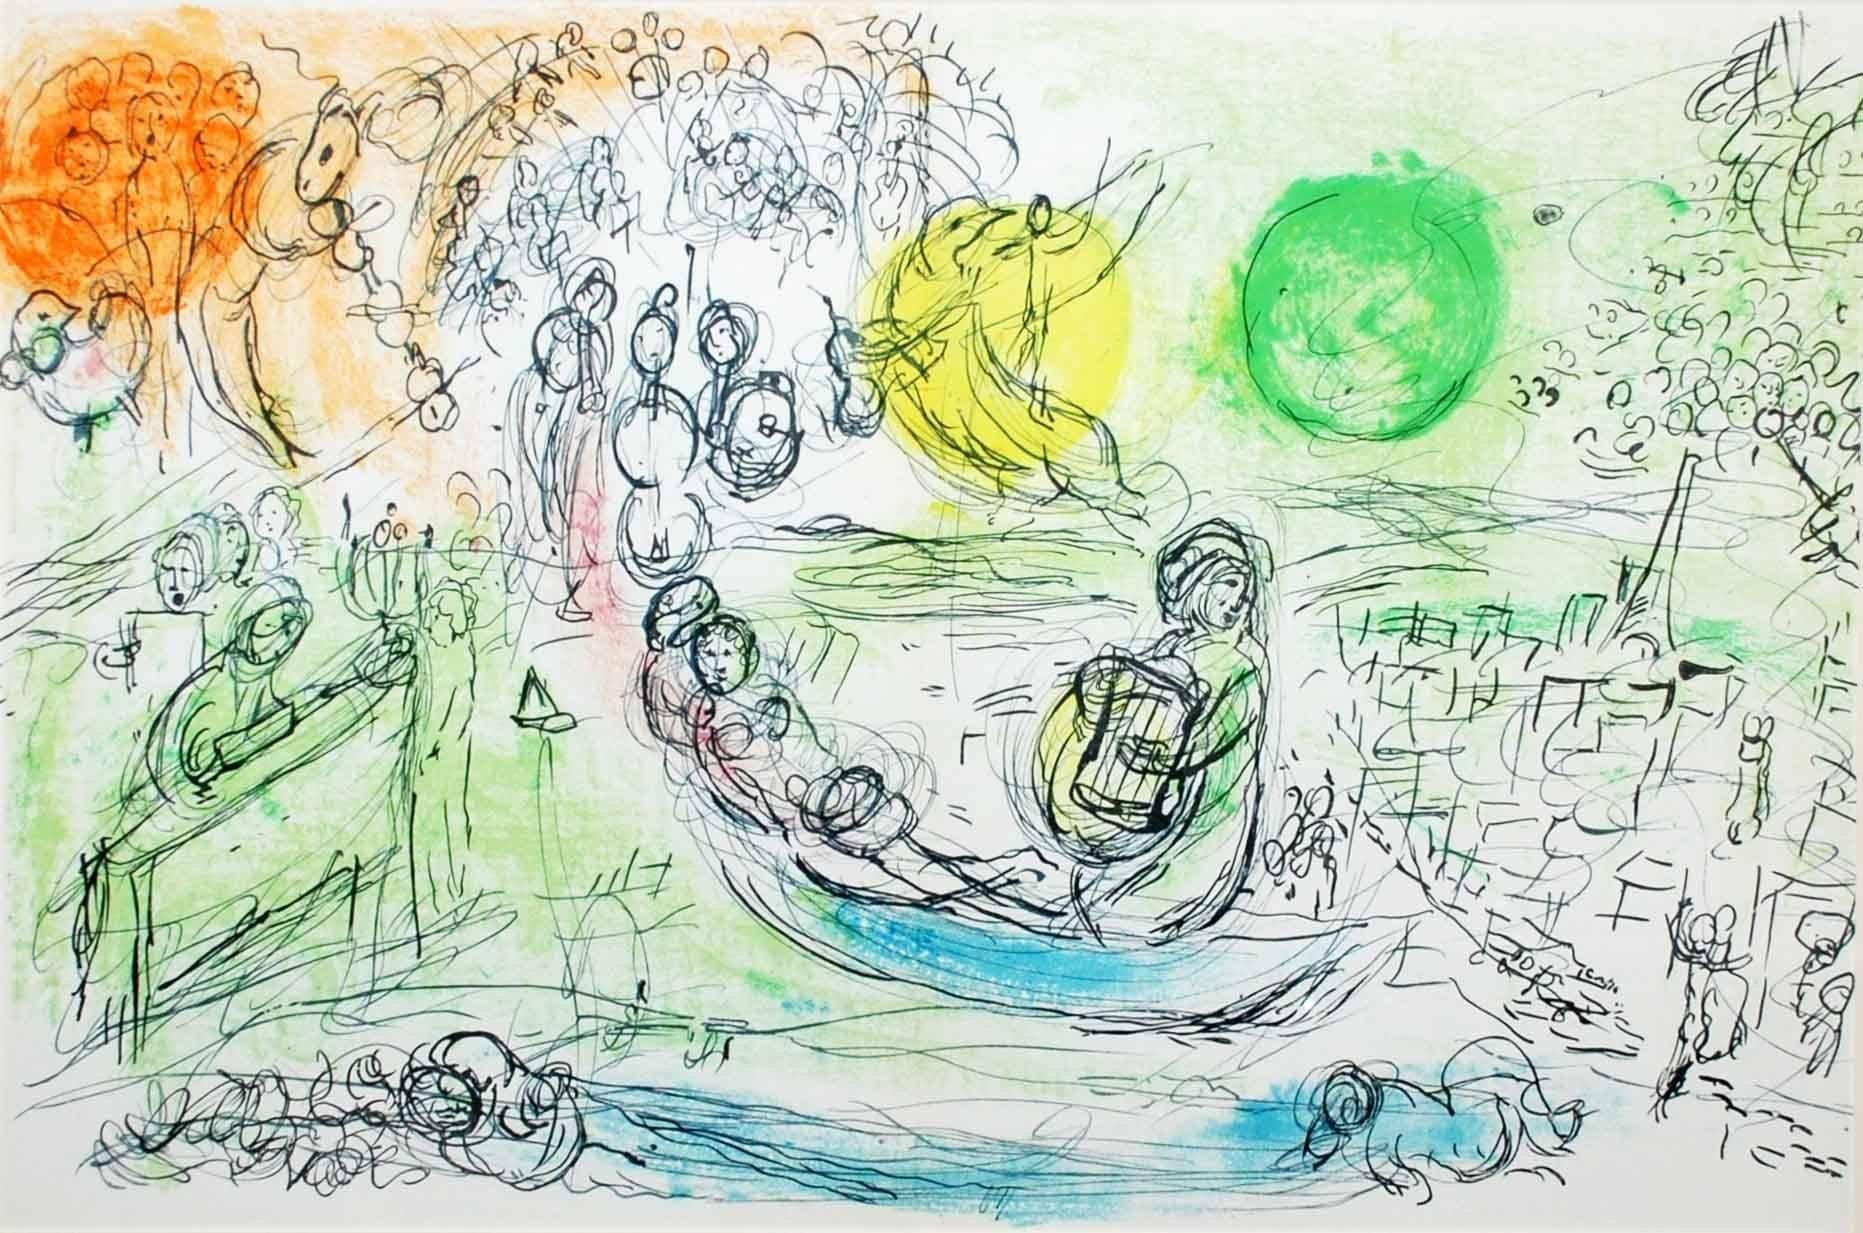 Artist: Marc Chagall
Title: The Concert (Derriere Le Miroir 99-100)
Portfolio: Derriere le Miroir
Medium: Lithograph
Date: 1957
Edition: 2500
Frame Size: 23" x 30"
Sheet Size: 15" x 22"
Image Size: 15" x 22"
Signature: Unsigned
Reference: Cramer 33